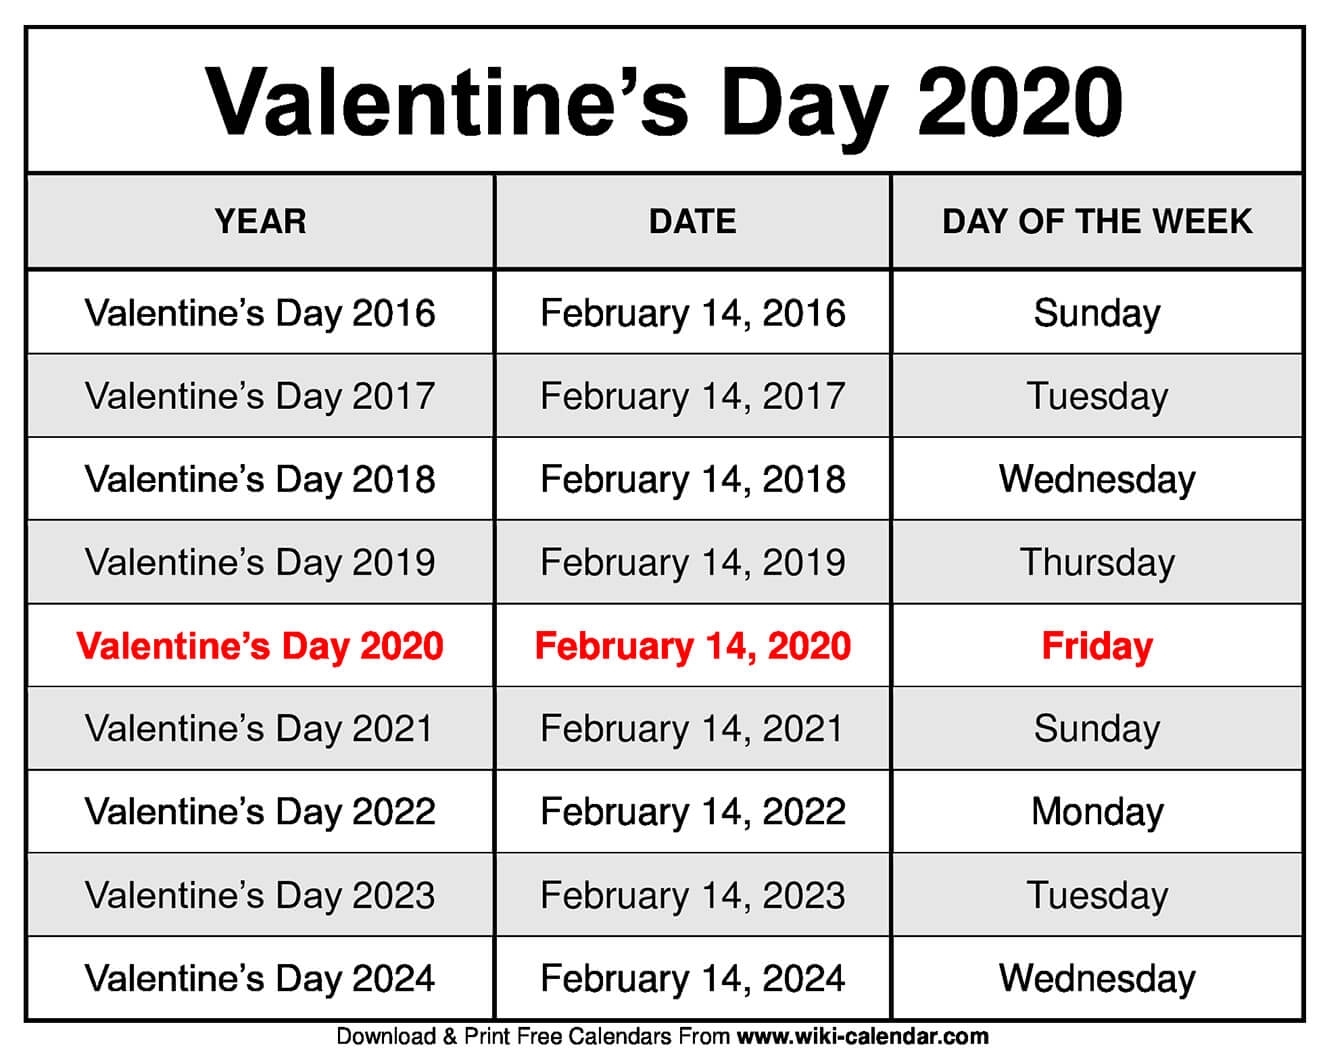 Free Printable February 2020 Calendar